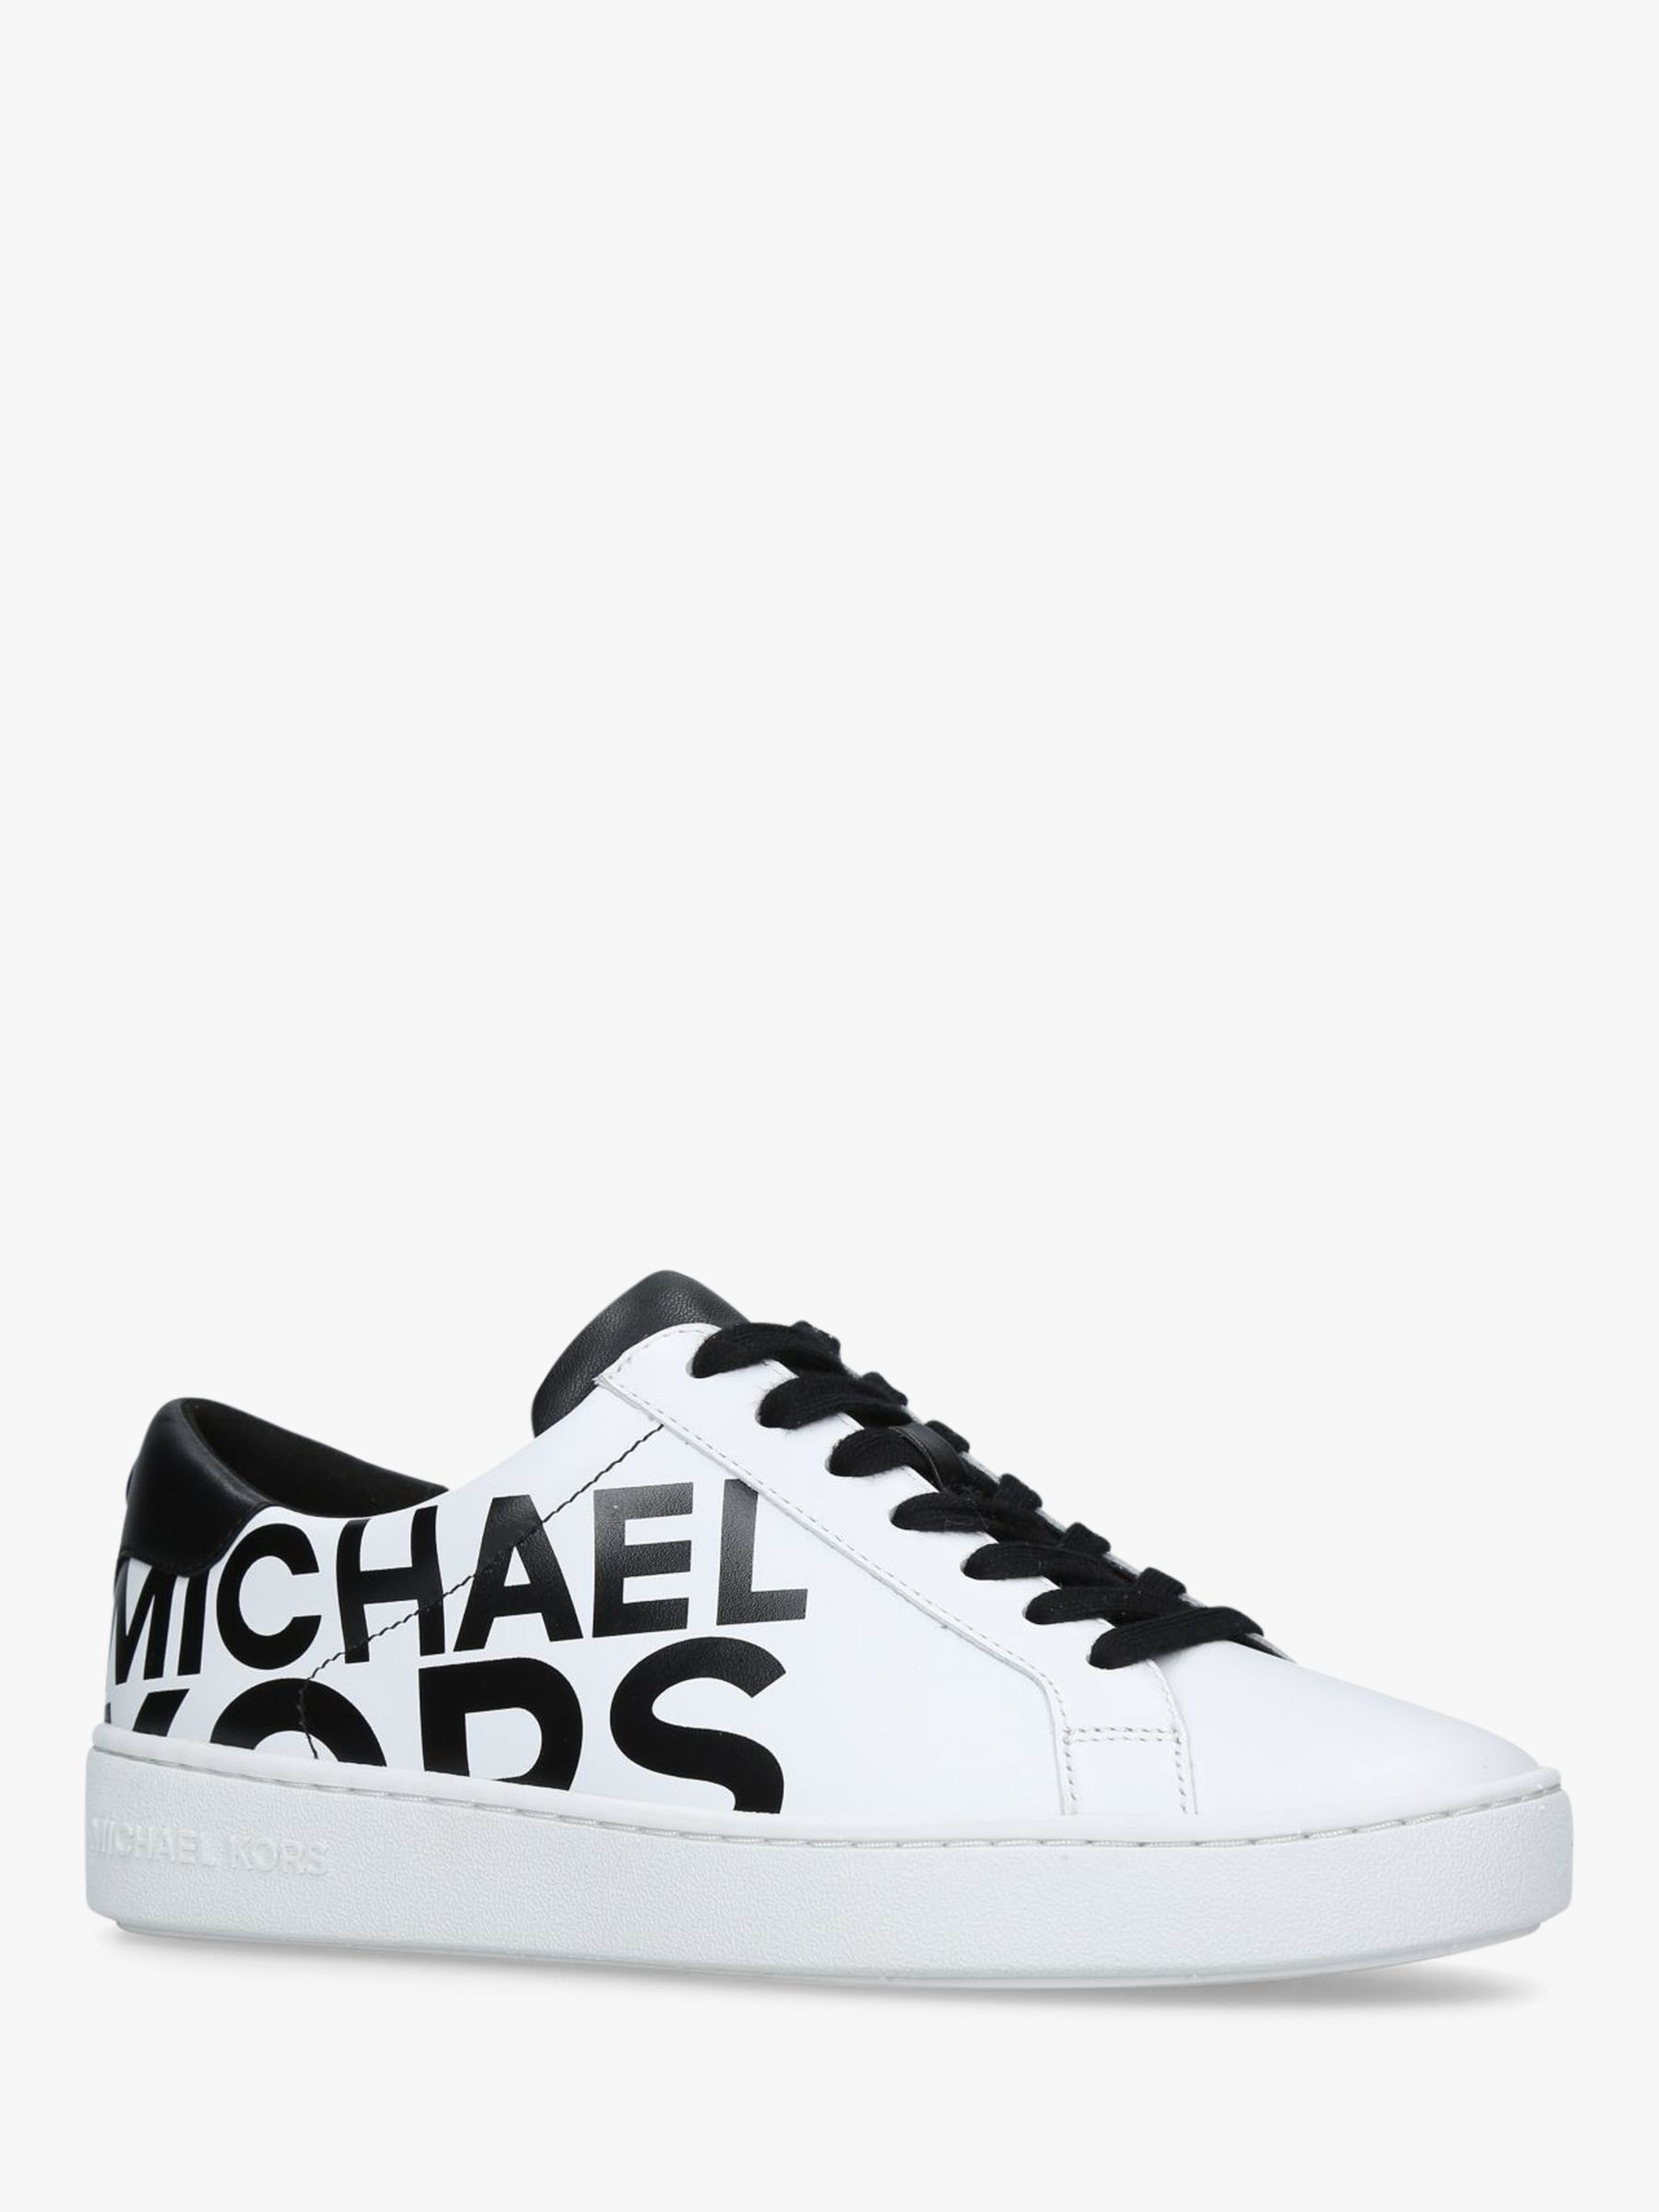 MICHAEL Michael Kors Irving Logo Trainers, White/Black Leather